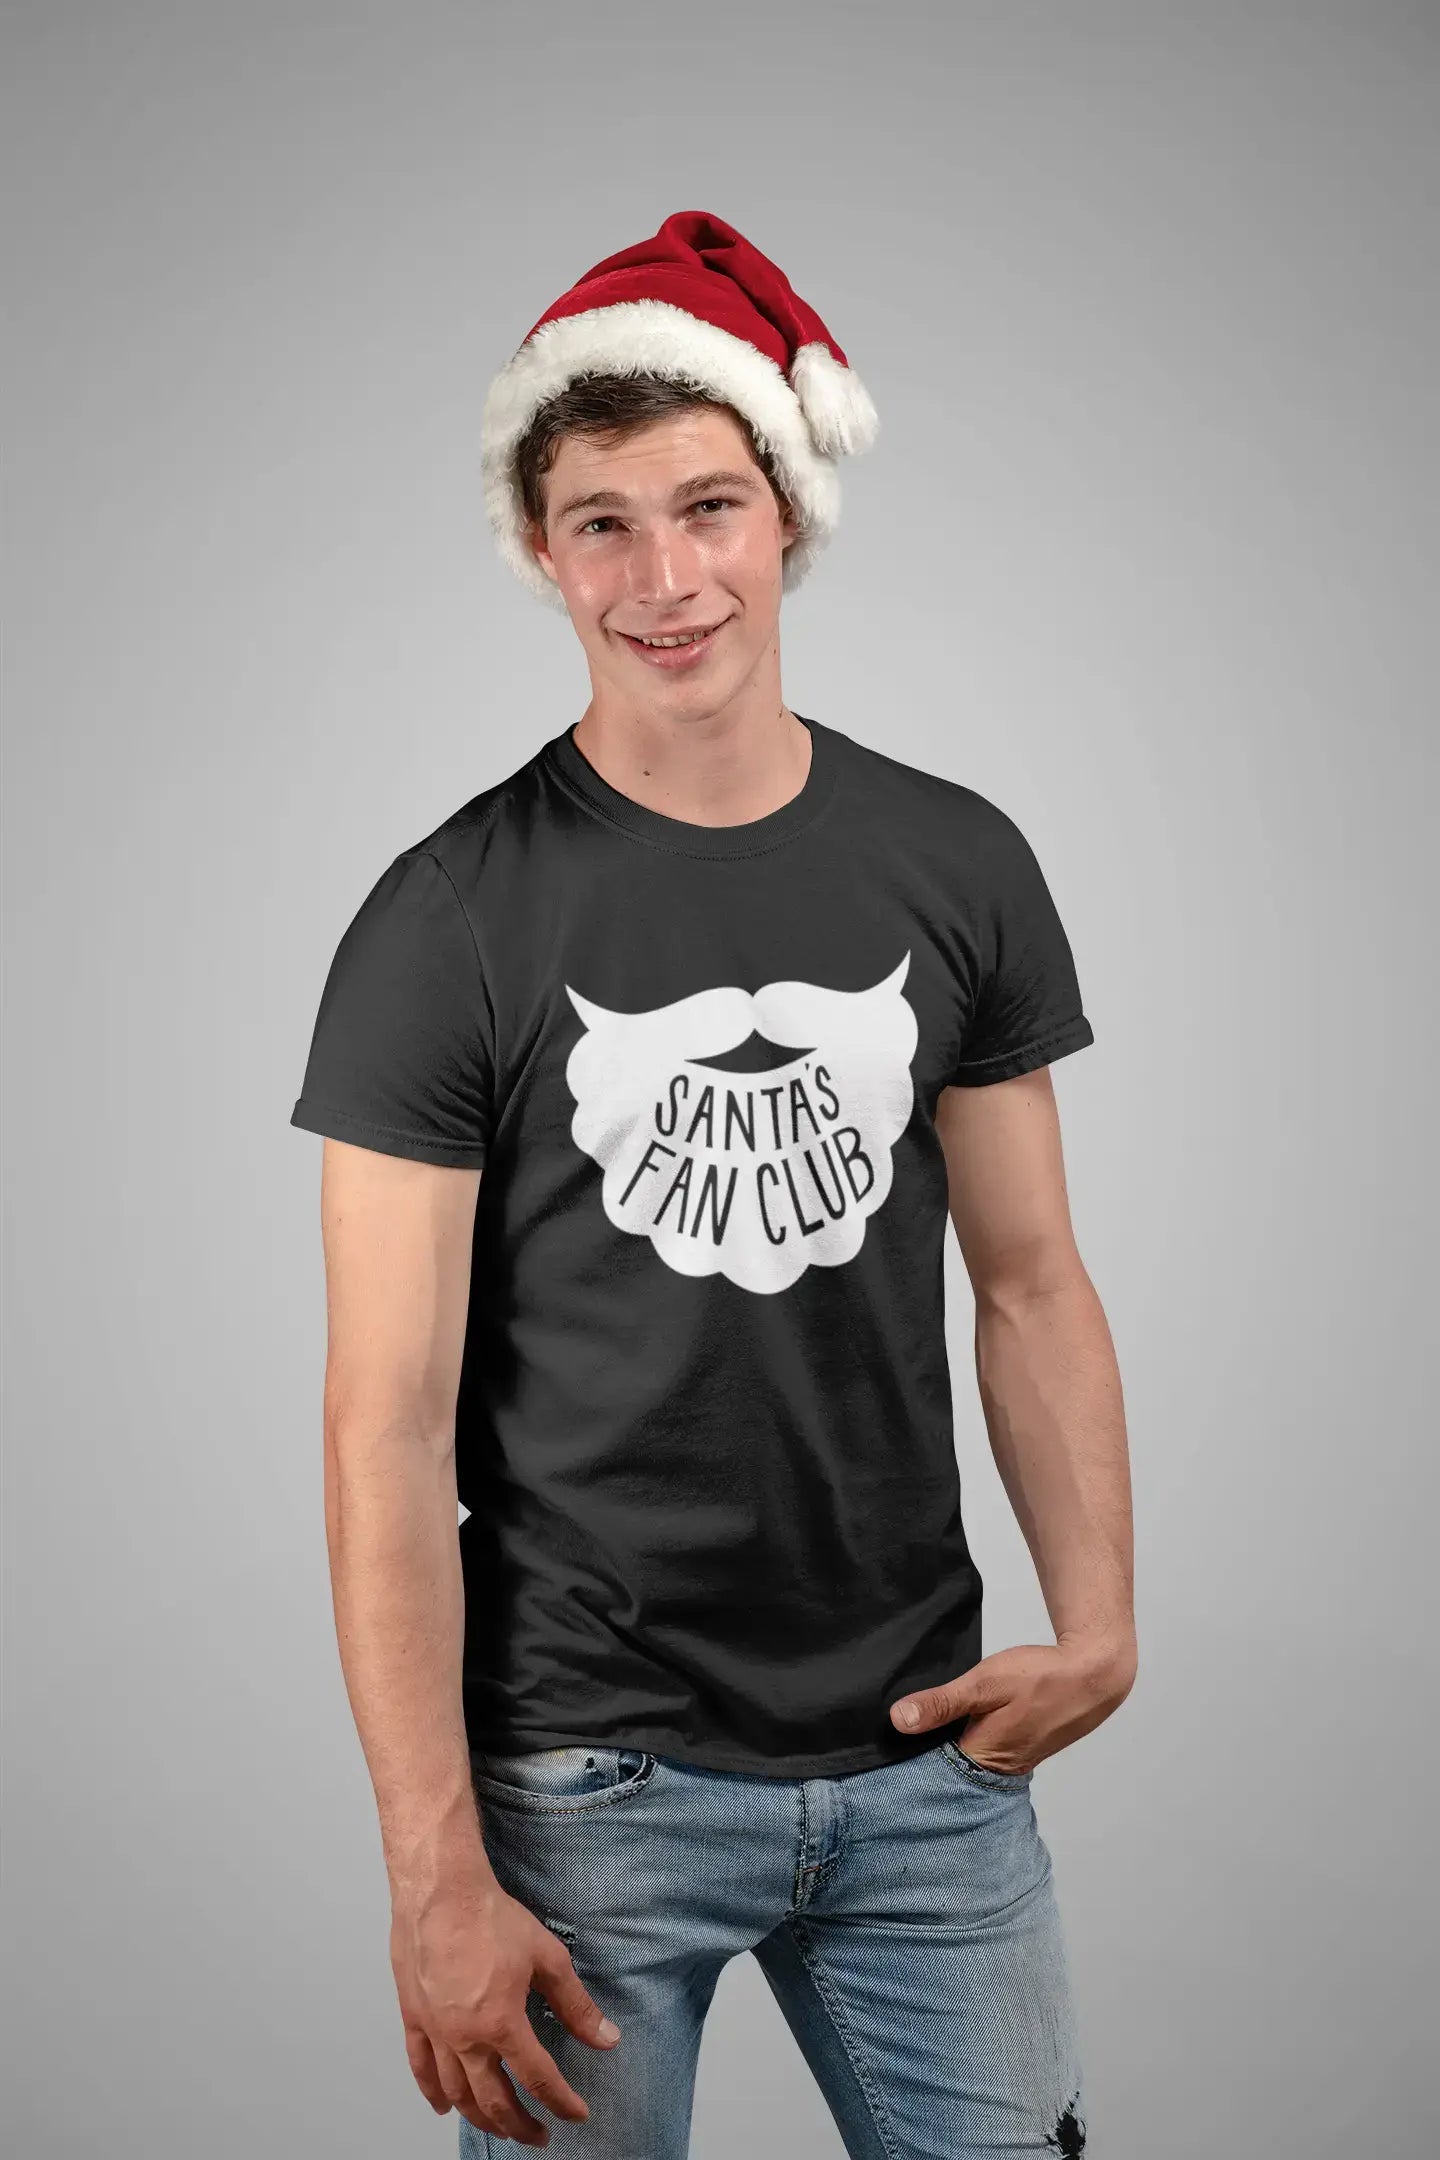 ULTRABASIC - Graphic Men's Santa's Fan Club Christmas T-Shirt Xmas Gift Ideas Tango Red